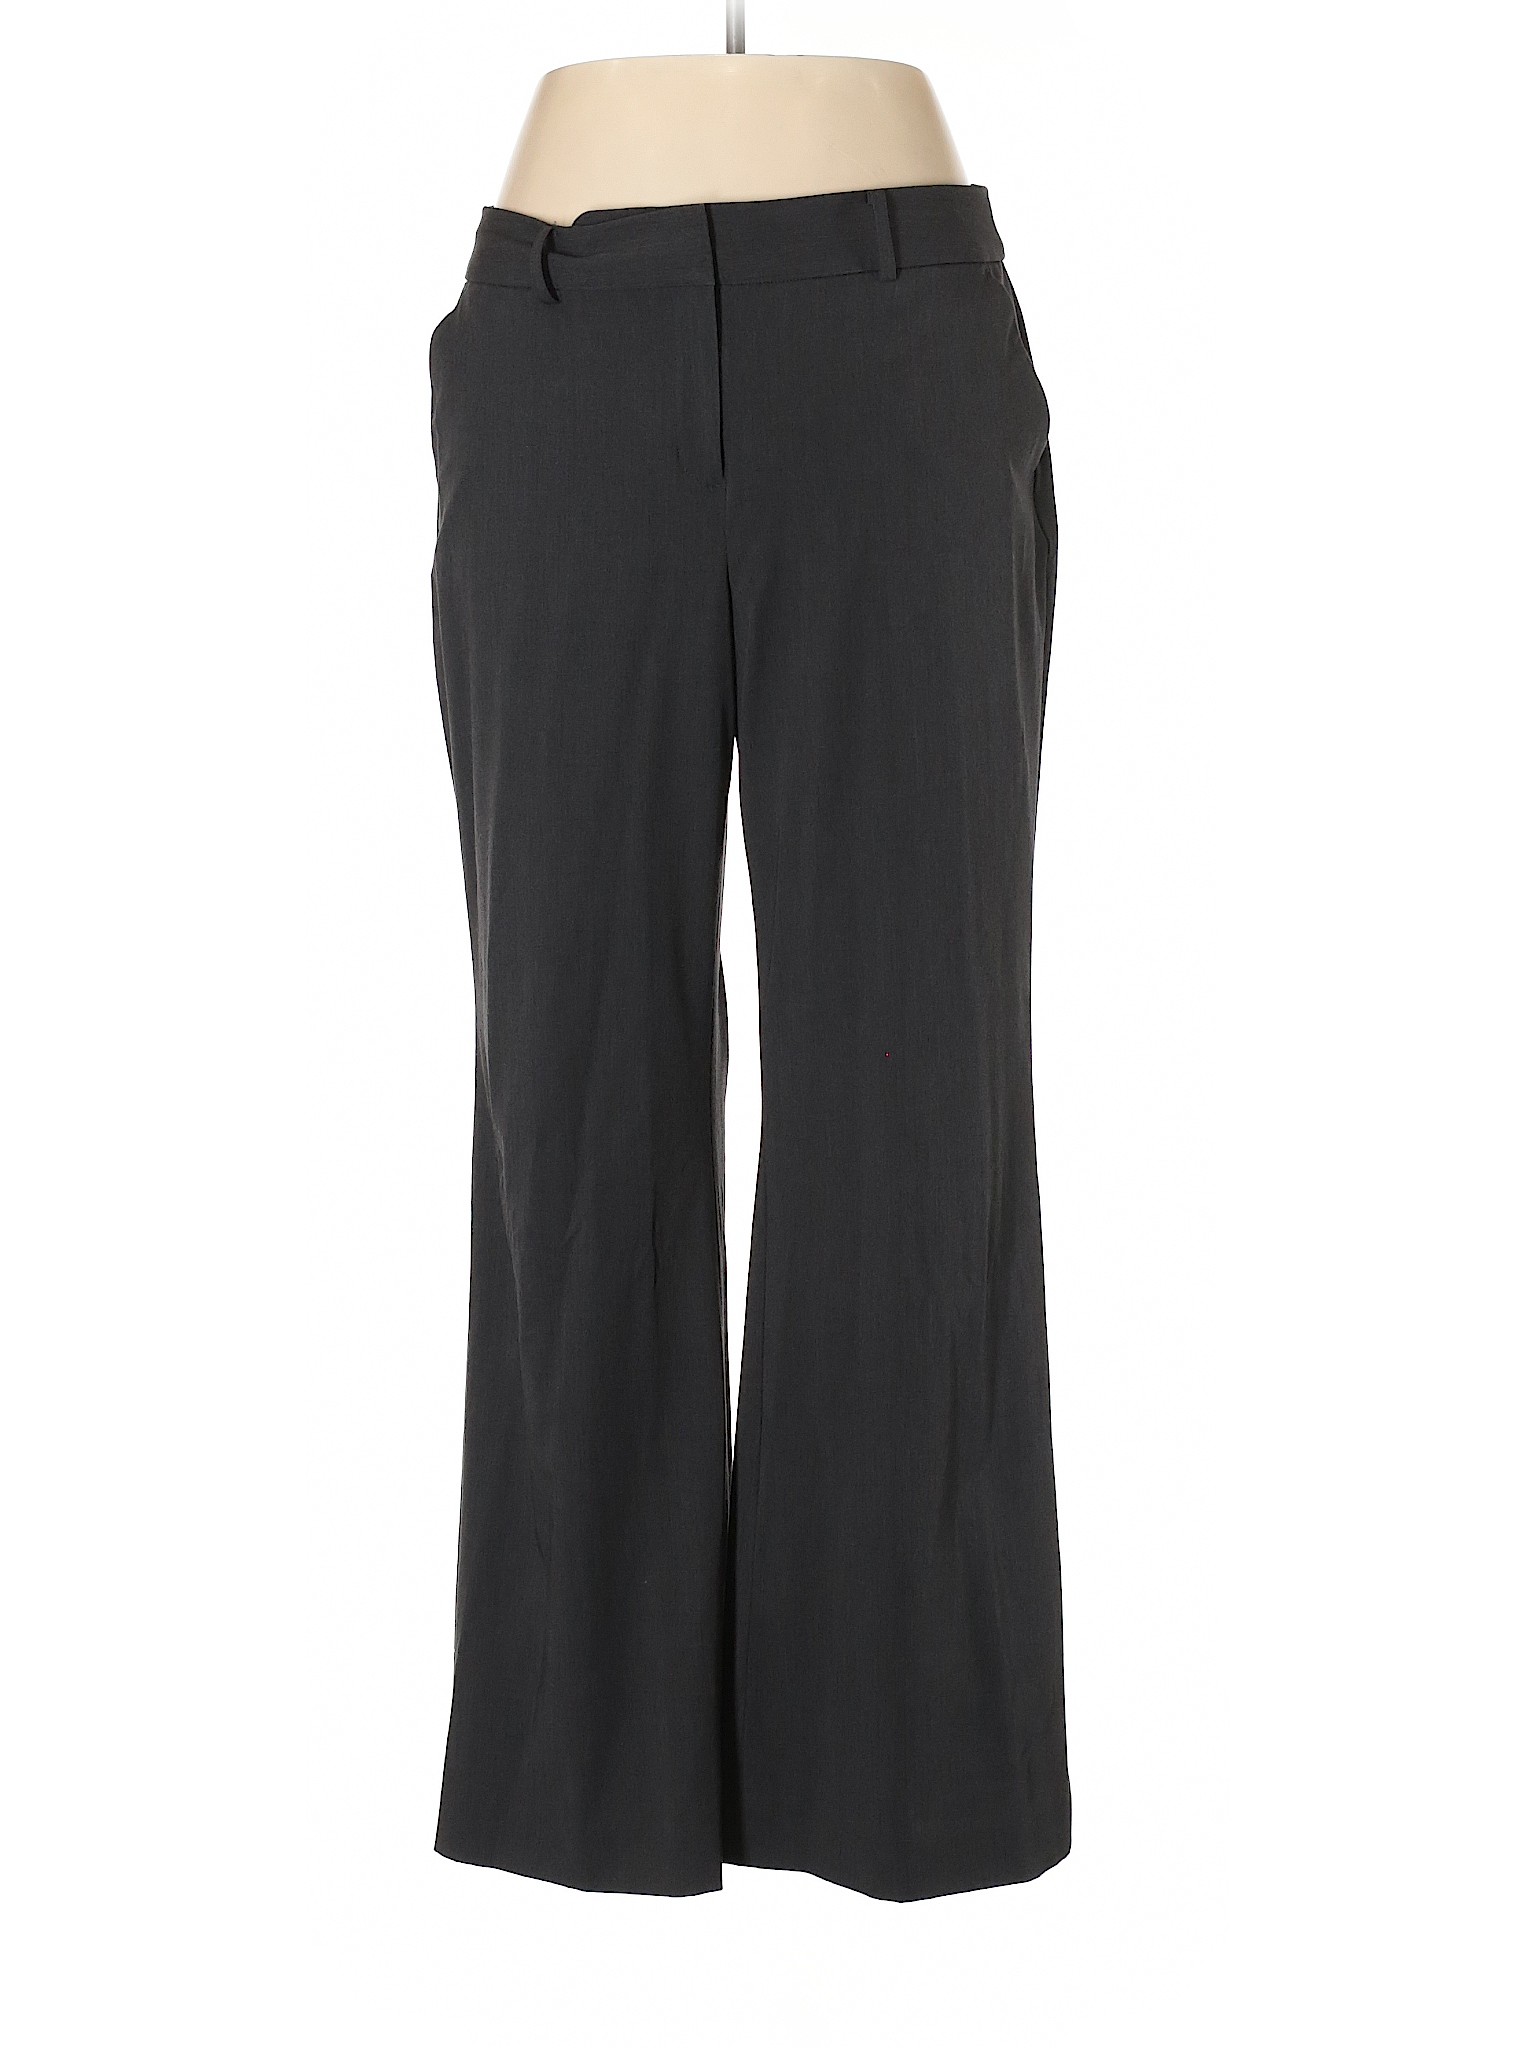 Liz Claiborne Women Black Dress Pants 14 | eBay